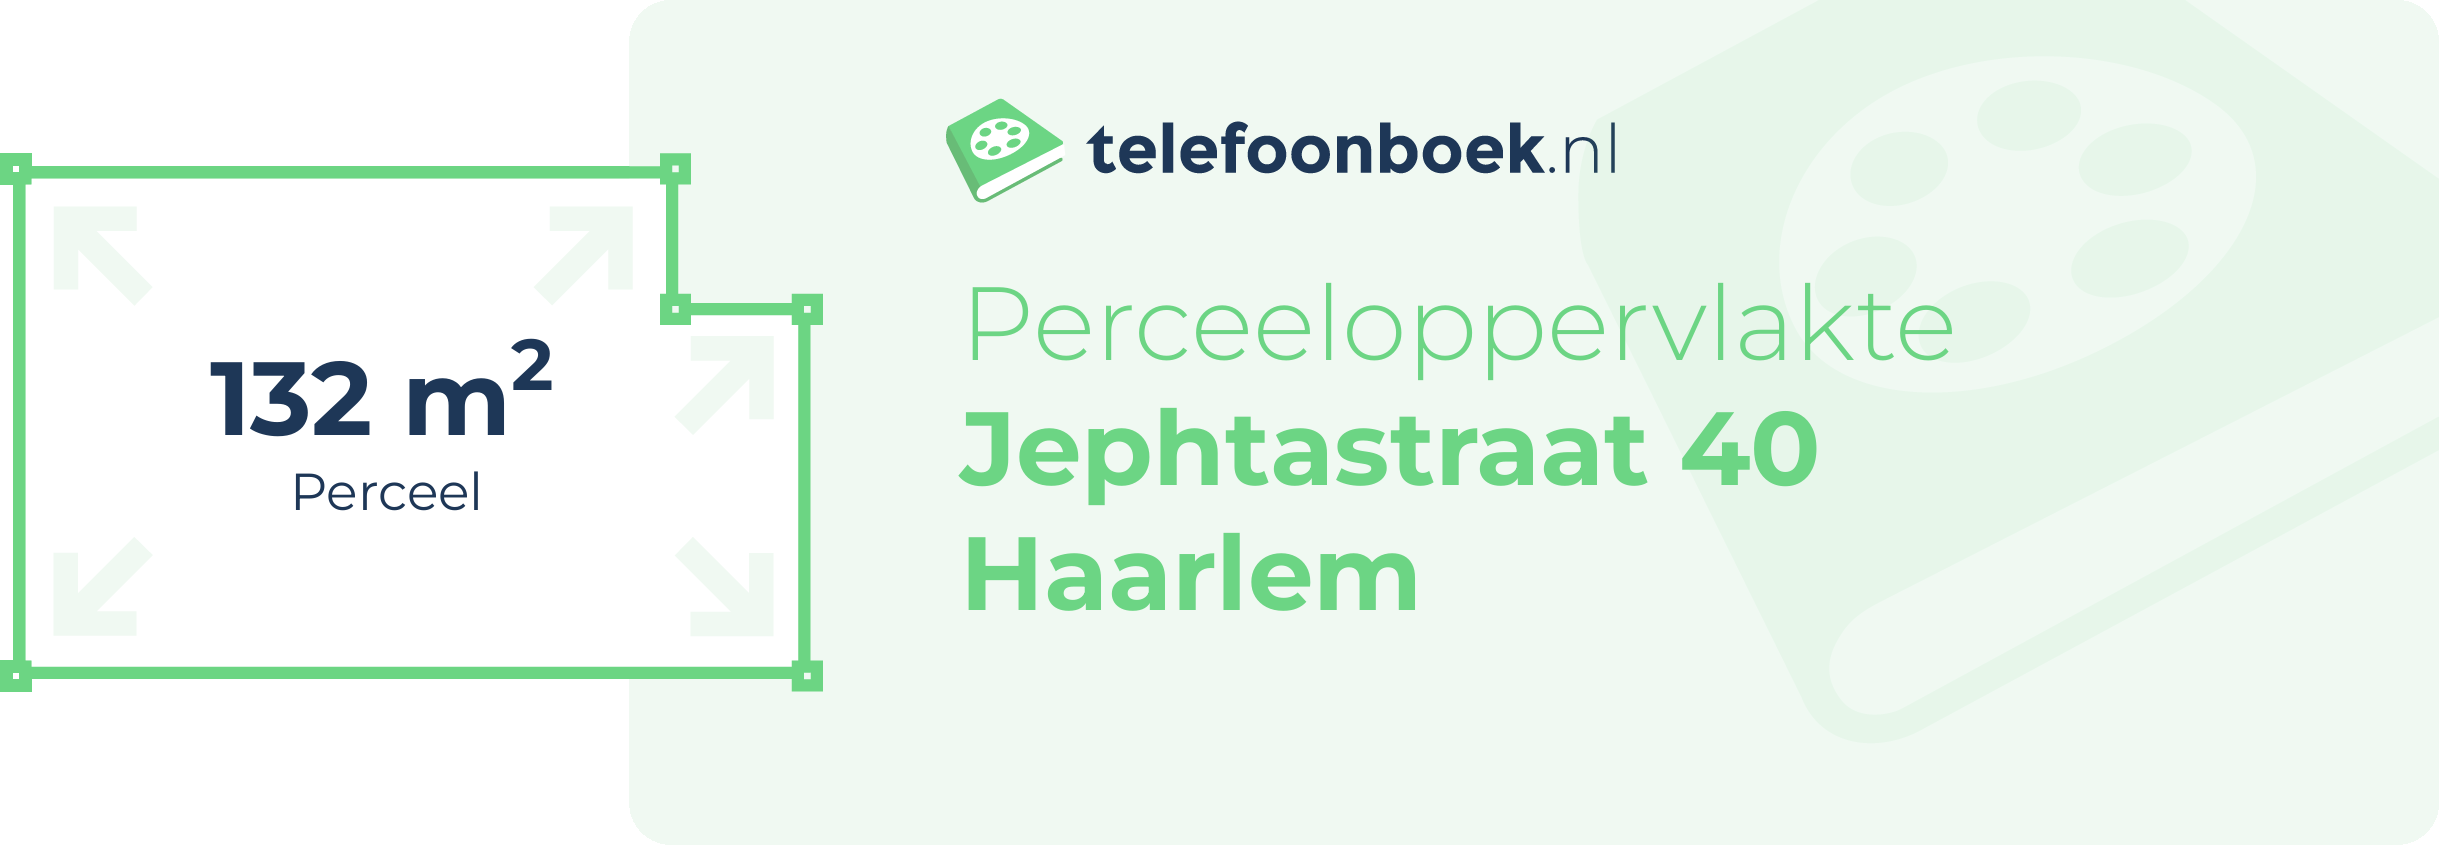 Perceeloppervlakte Jephtastraat 40 Haarlem